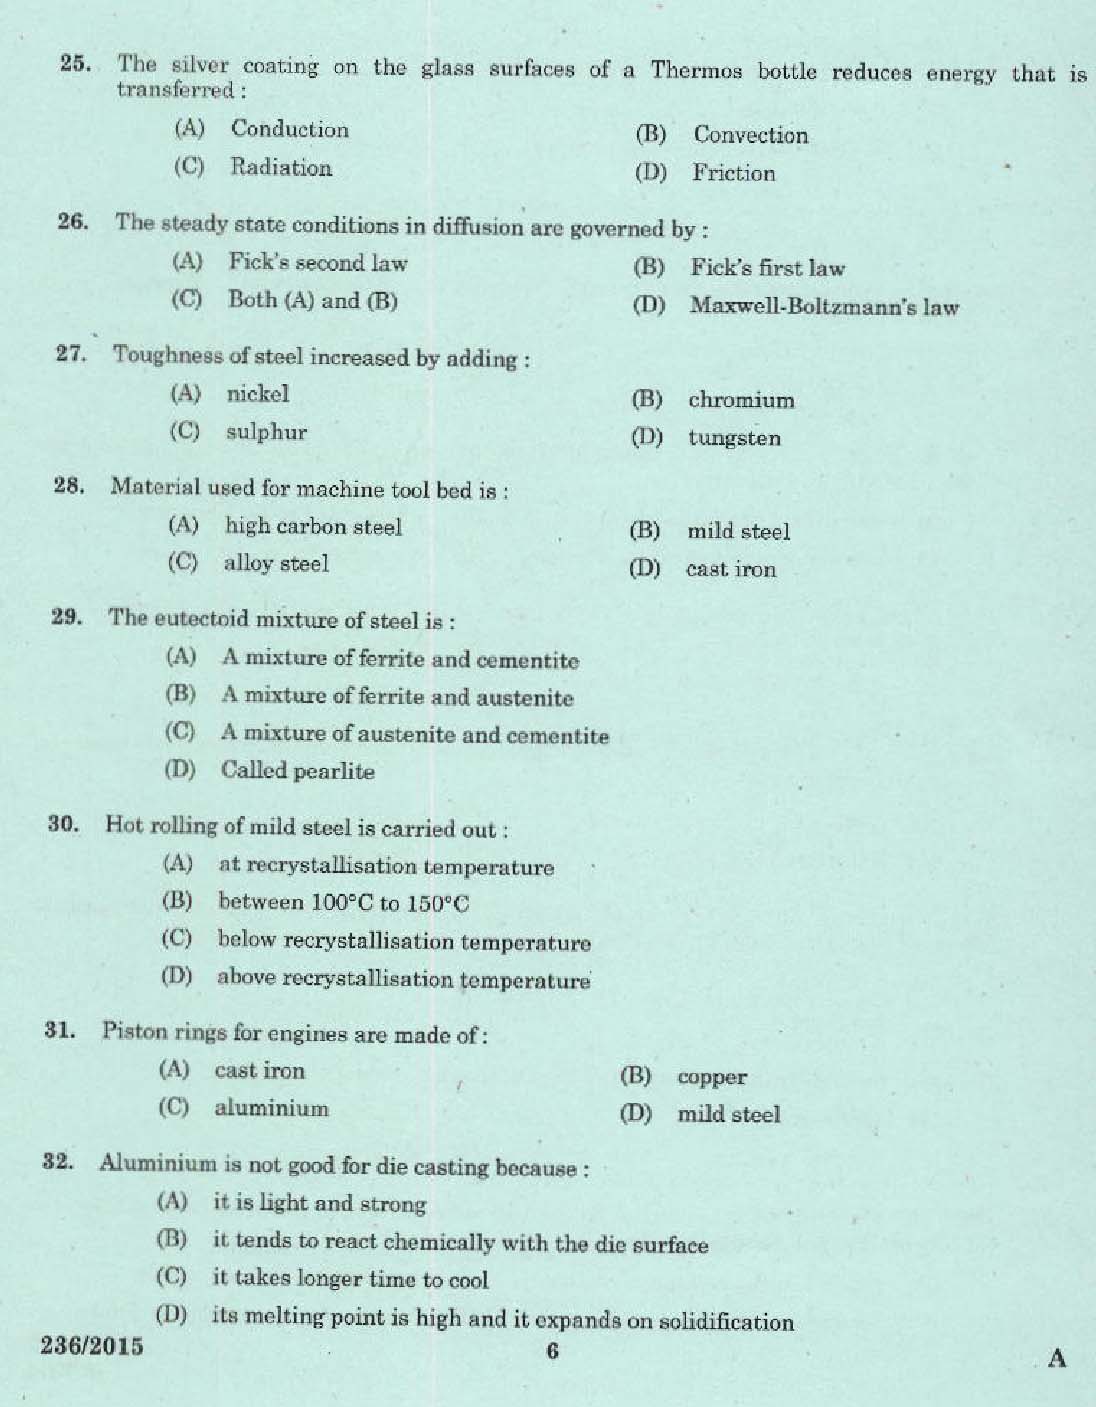 Kerala PSC Foreman Exam 2015 Question Paper Code 2362015 4